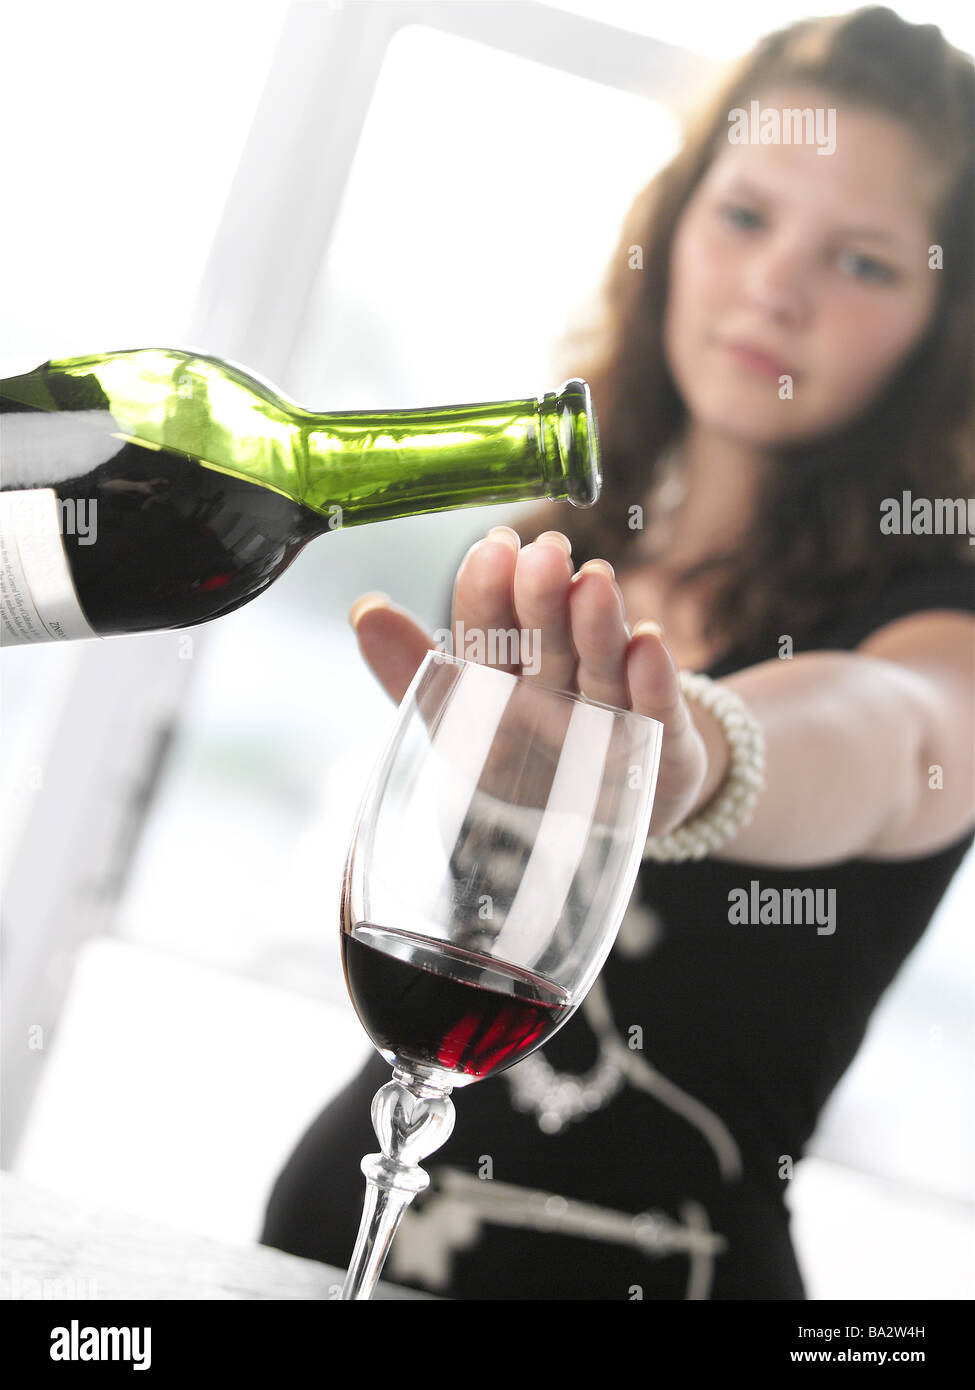 Frau junge Hand rot-Wein-Glas-Flasche hält die geschlossenen Detail Unschärfe Serie Leute Party Feier Party Getränke Alkohol Stockfoto